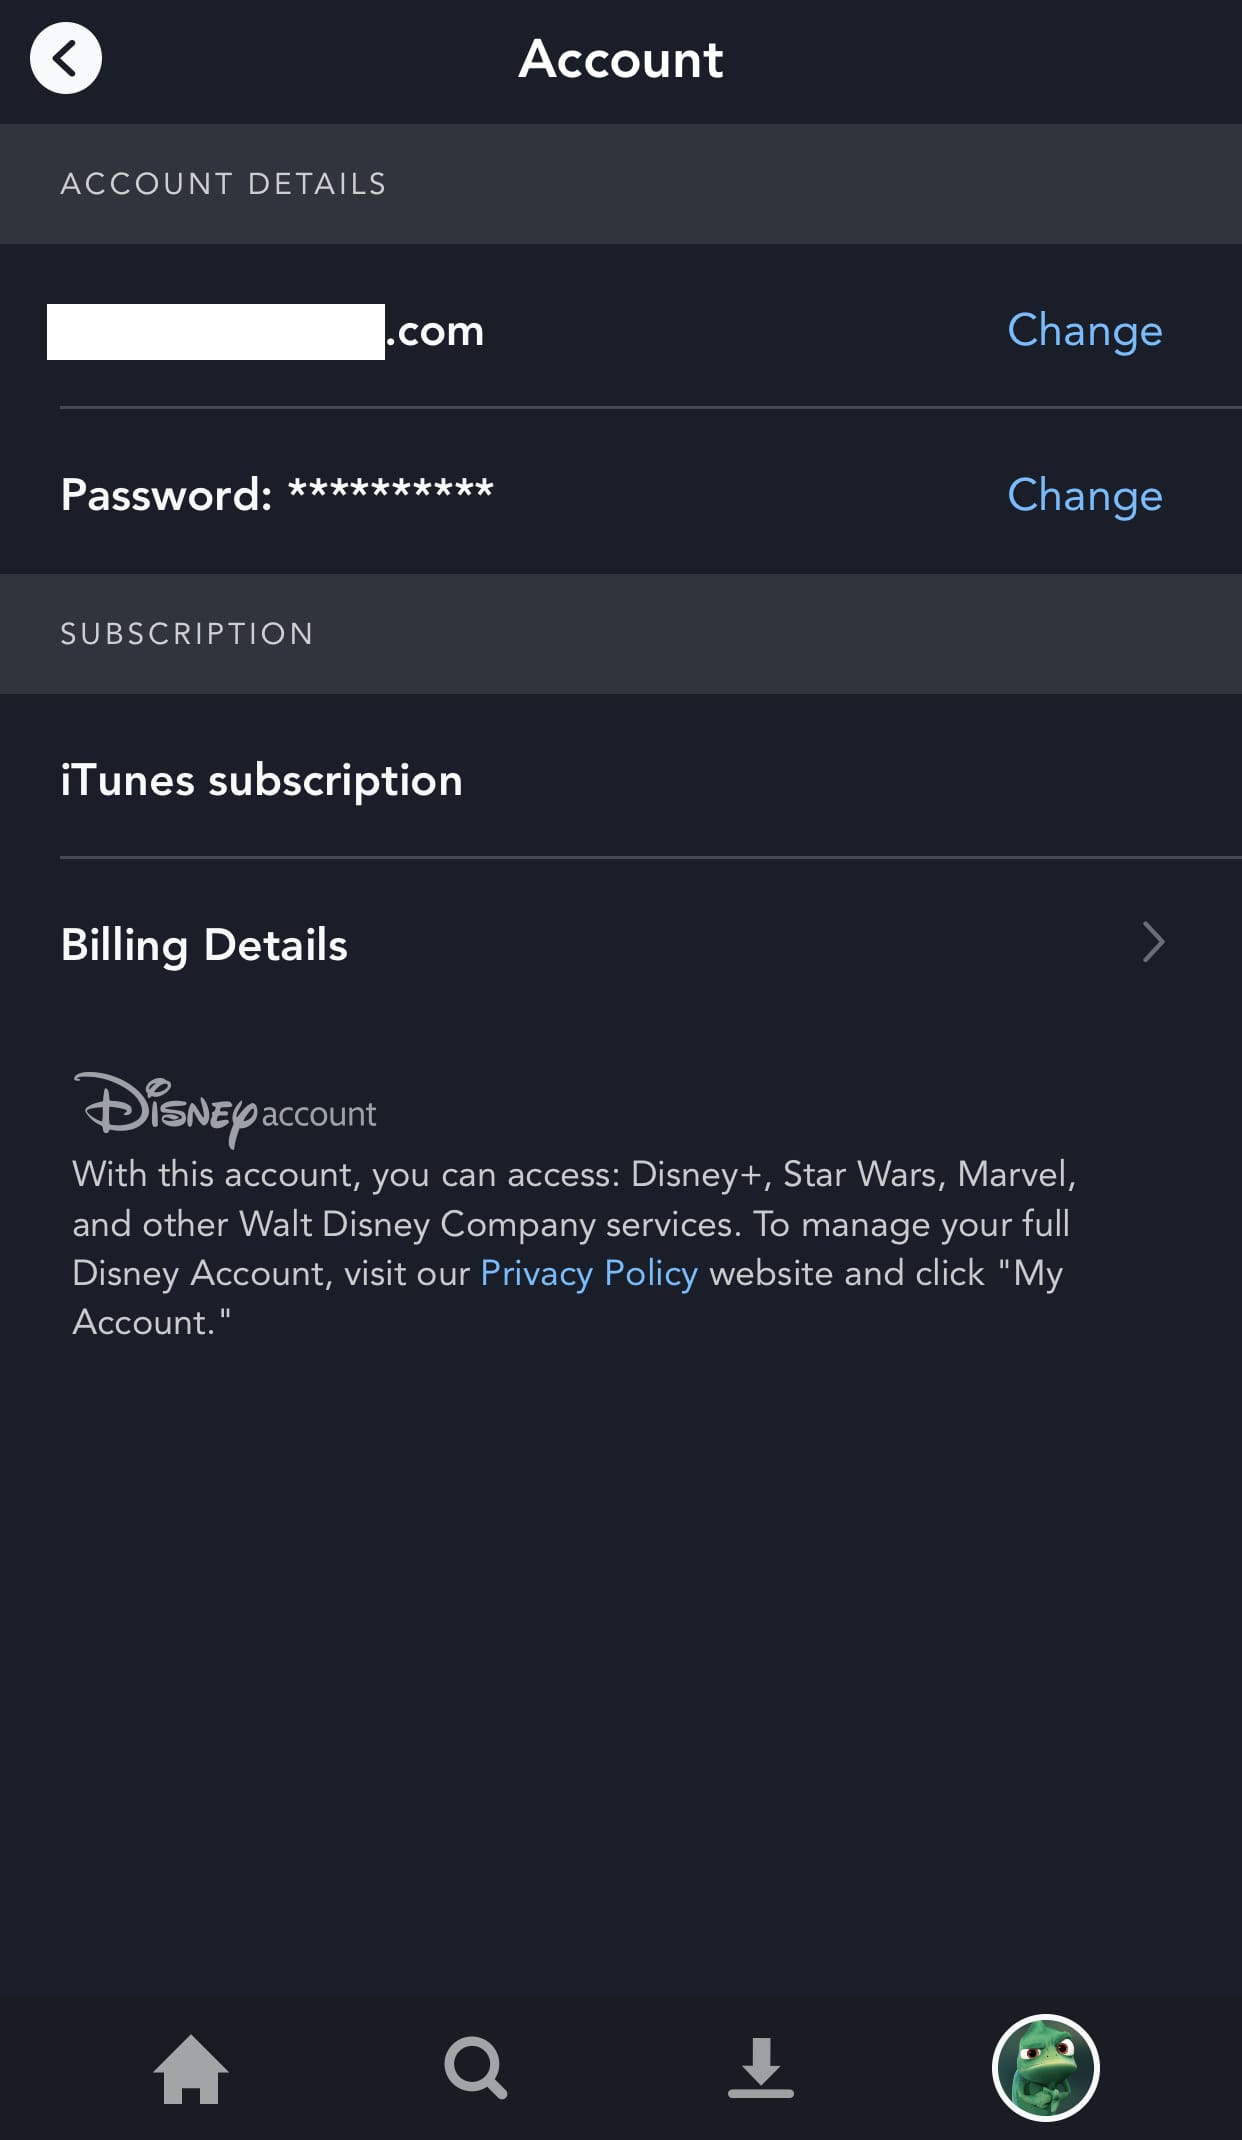 Account management in the Disney+ app